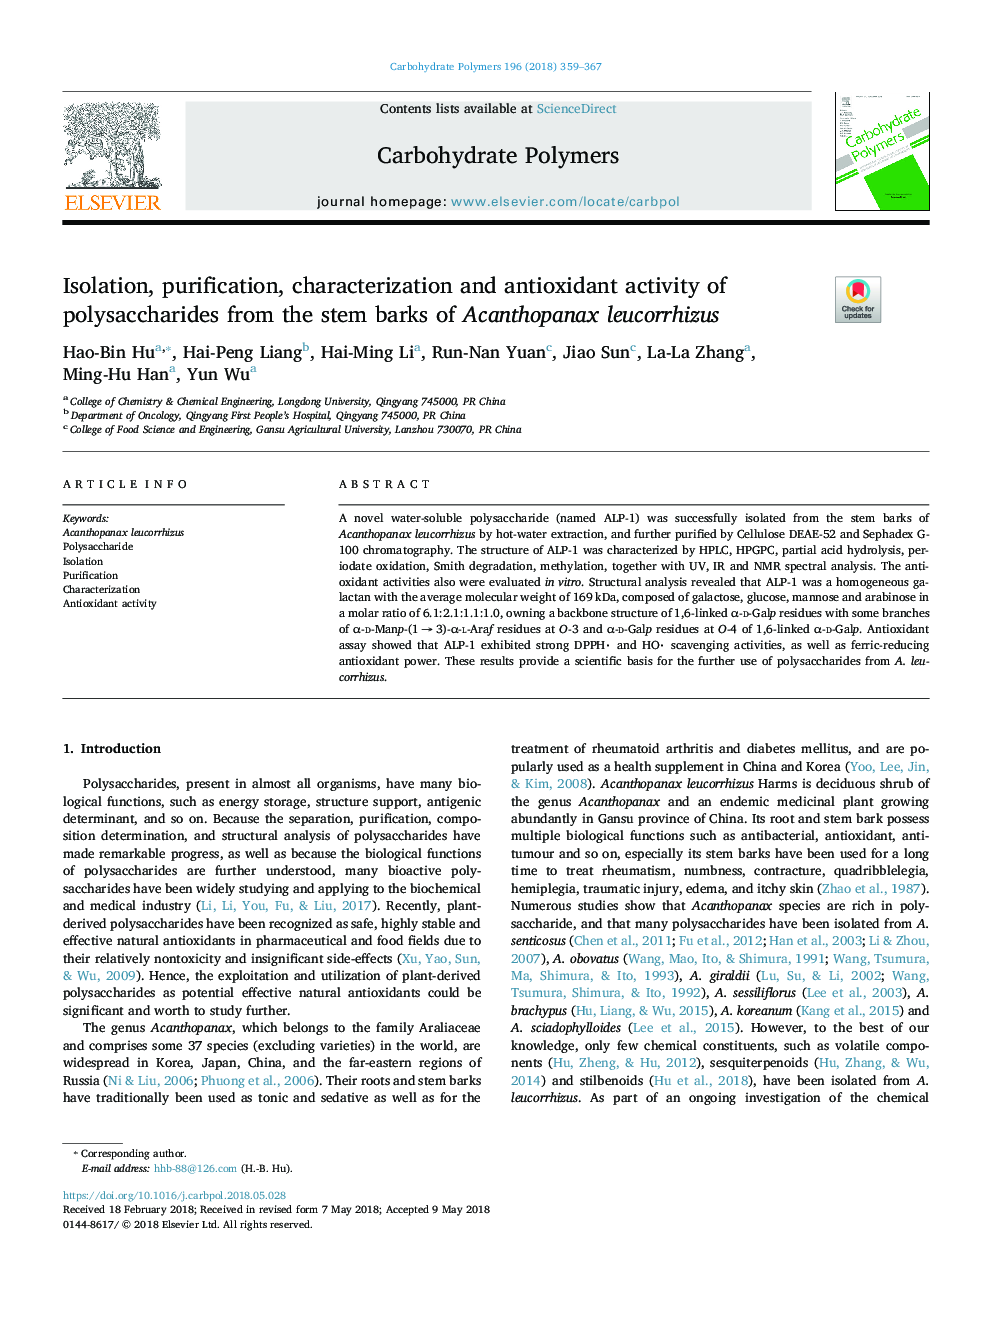 Isolation, purification, characterization and antioxidant activity of polysaccharides from the stem barks of Acanthopanax leucorrhizus